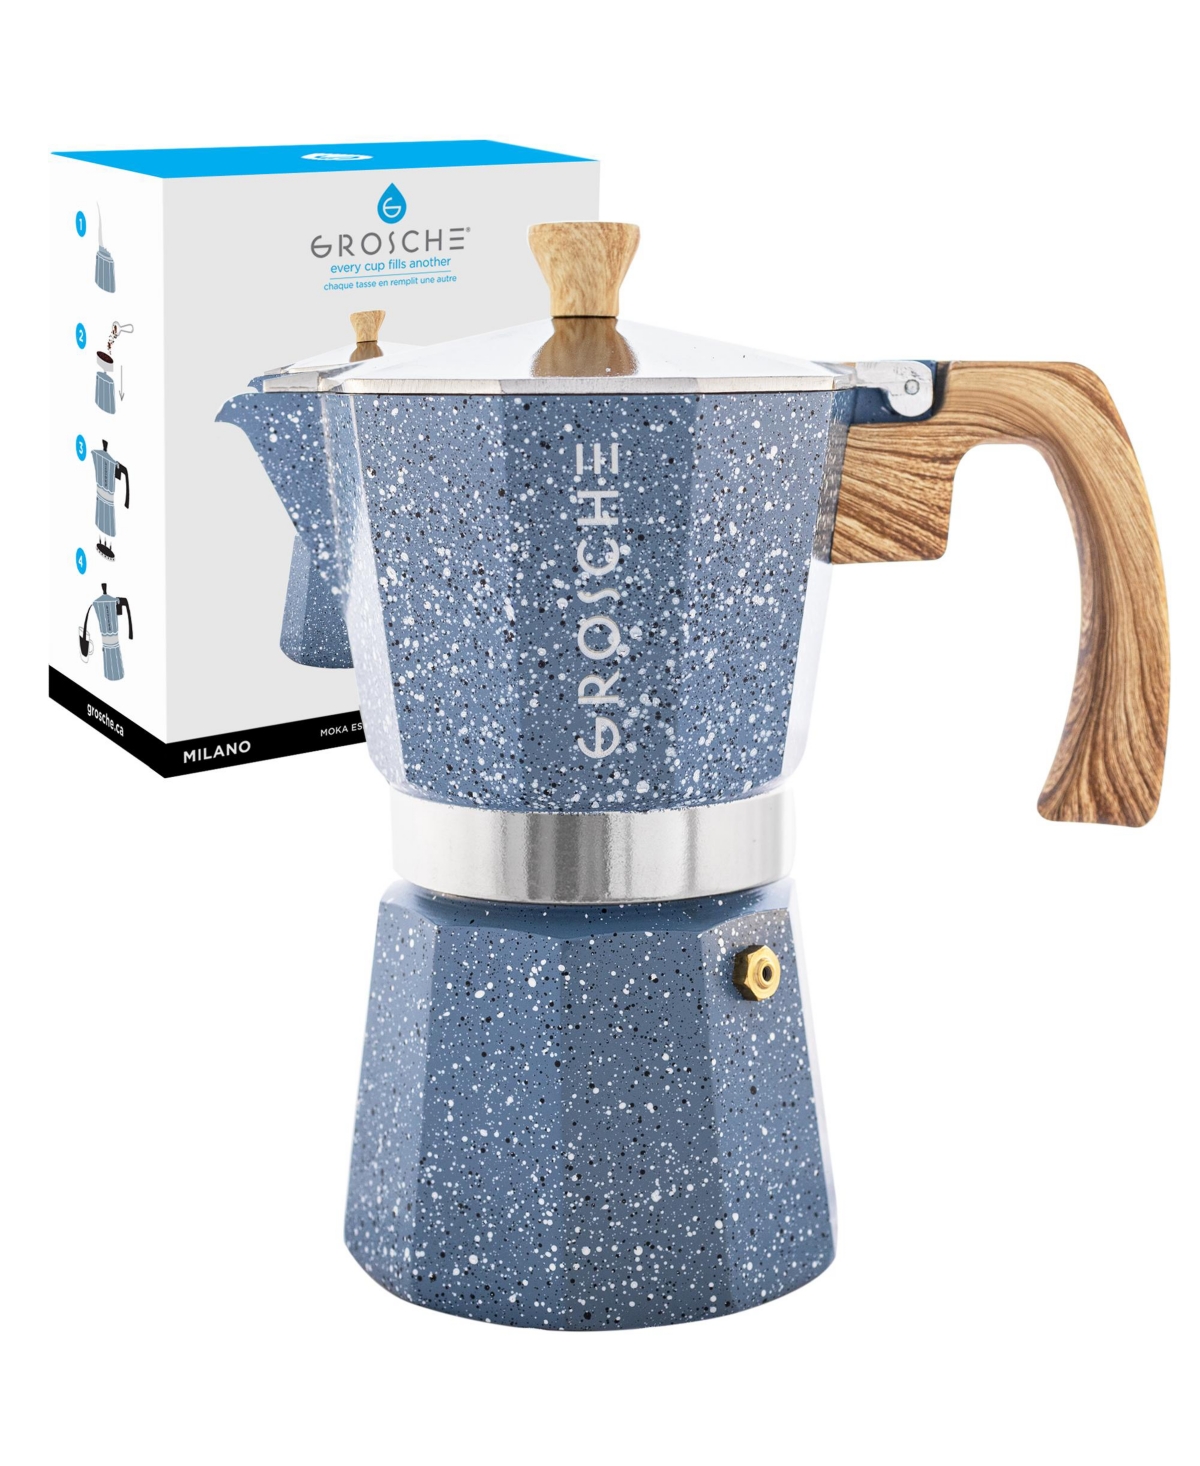 Grosche Milano Stone Stovetop Espresso Maker, 9 Cup Moka Pot Gift Set In Indigo Blue